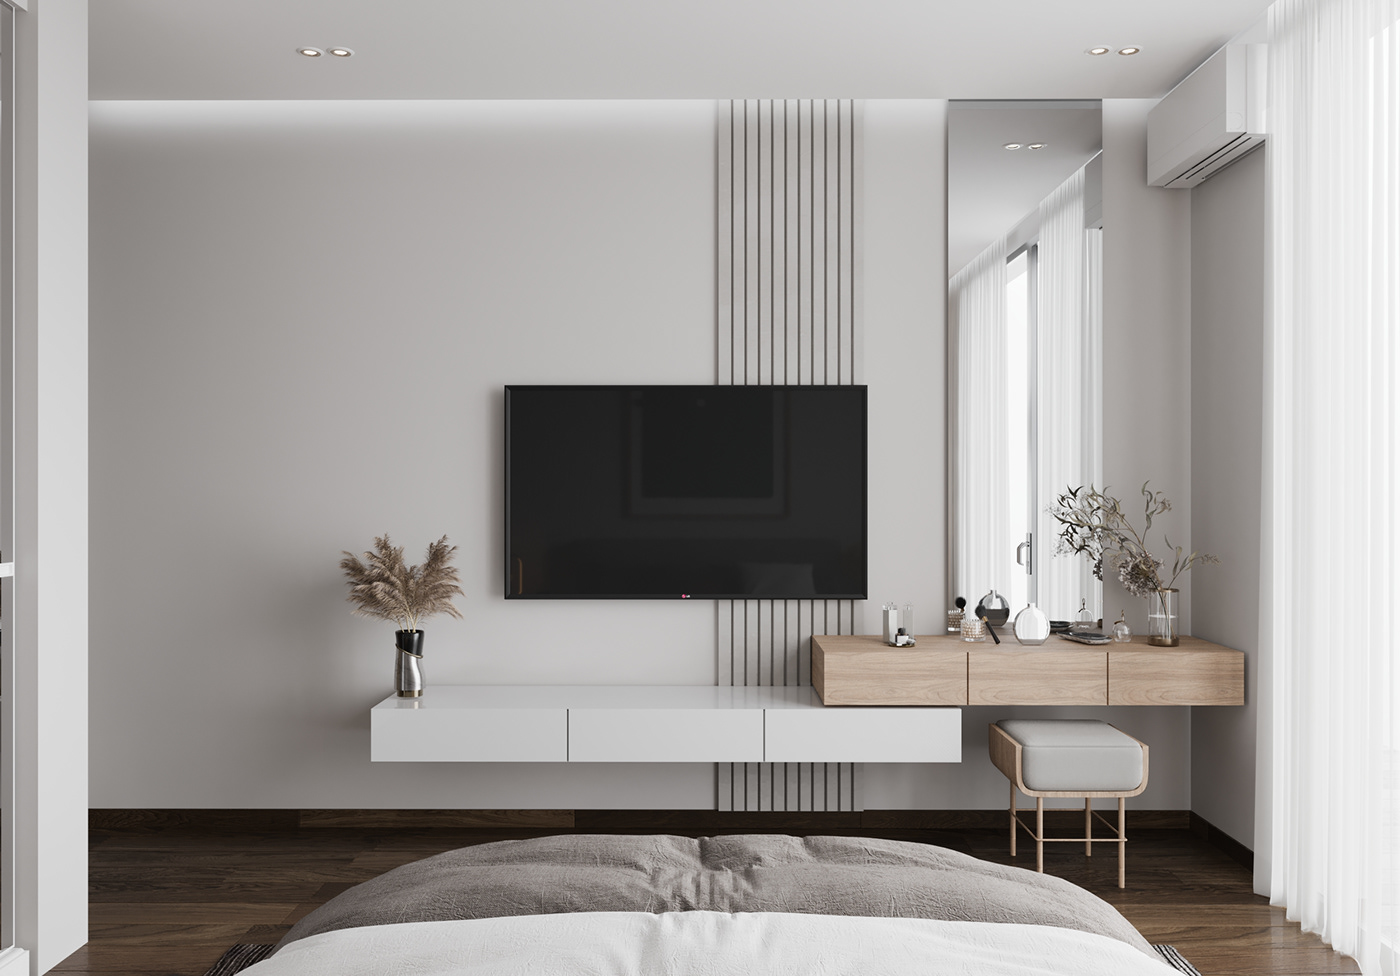 Interior bedroom blue Minimalism calm cozy modern dresser natural wood